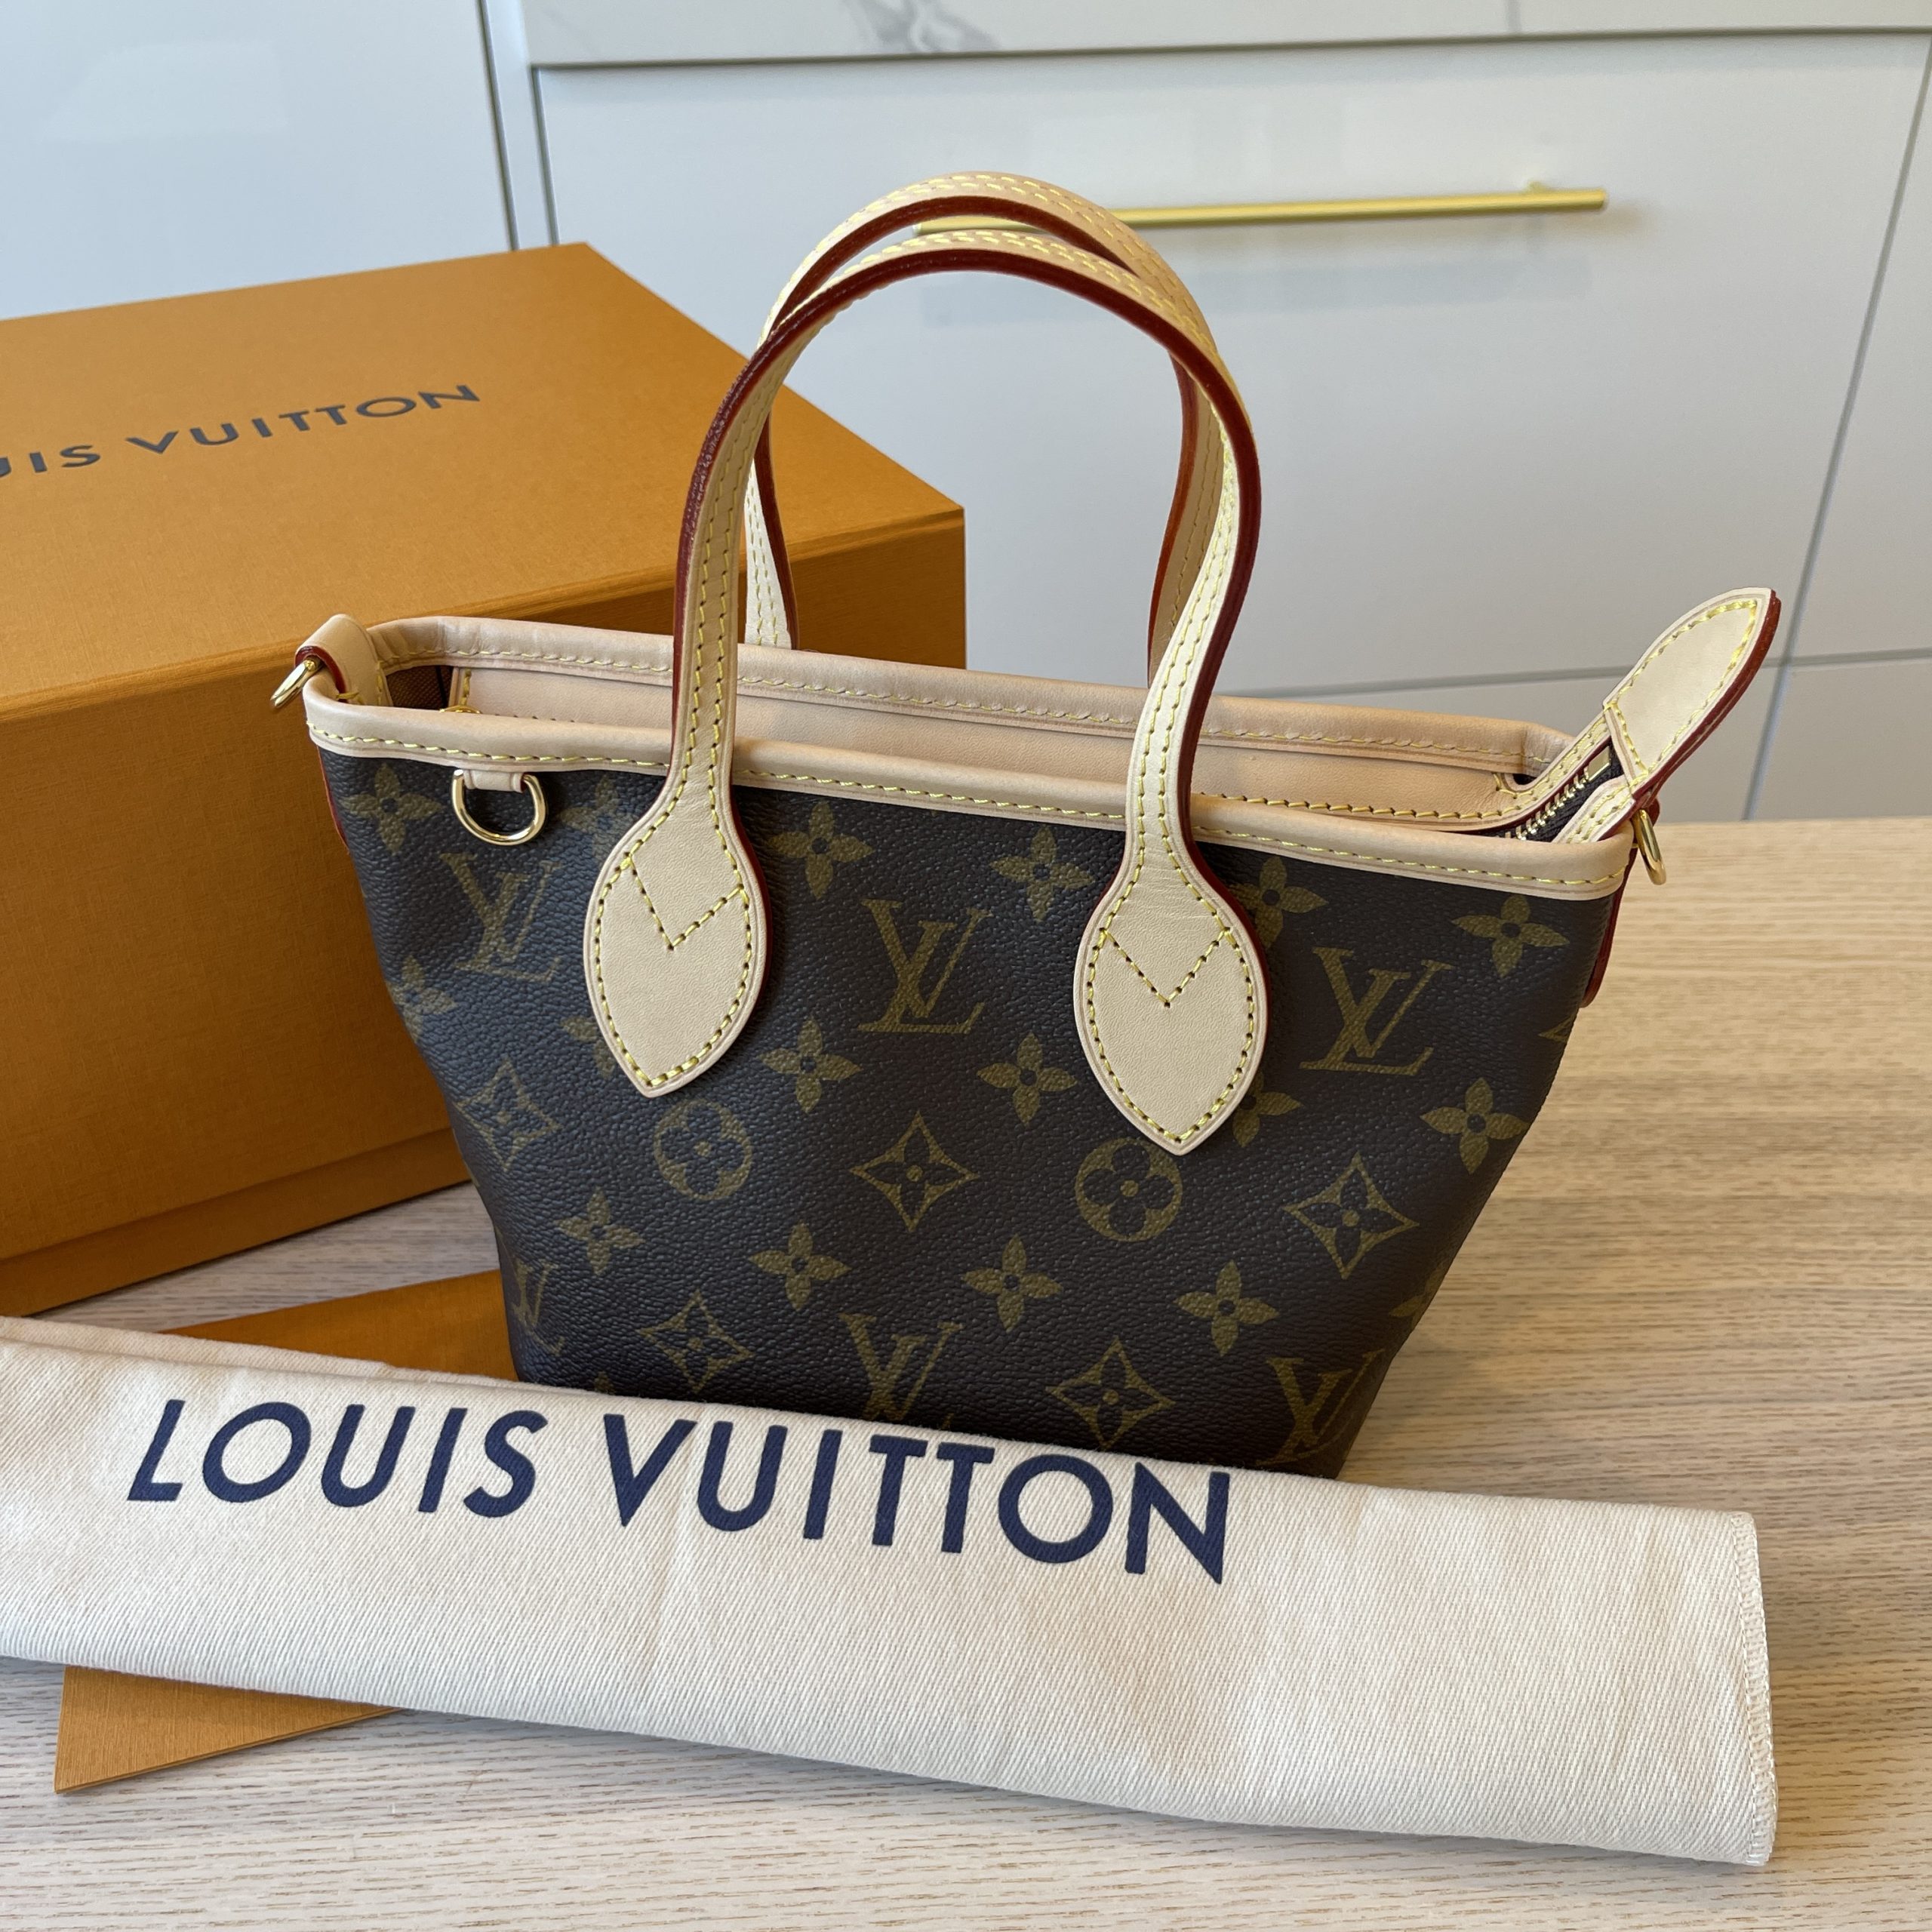 SOLD Brand new in dust bag Louis Vuitton Monogram Neverfull MM